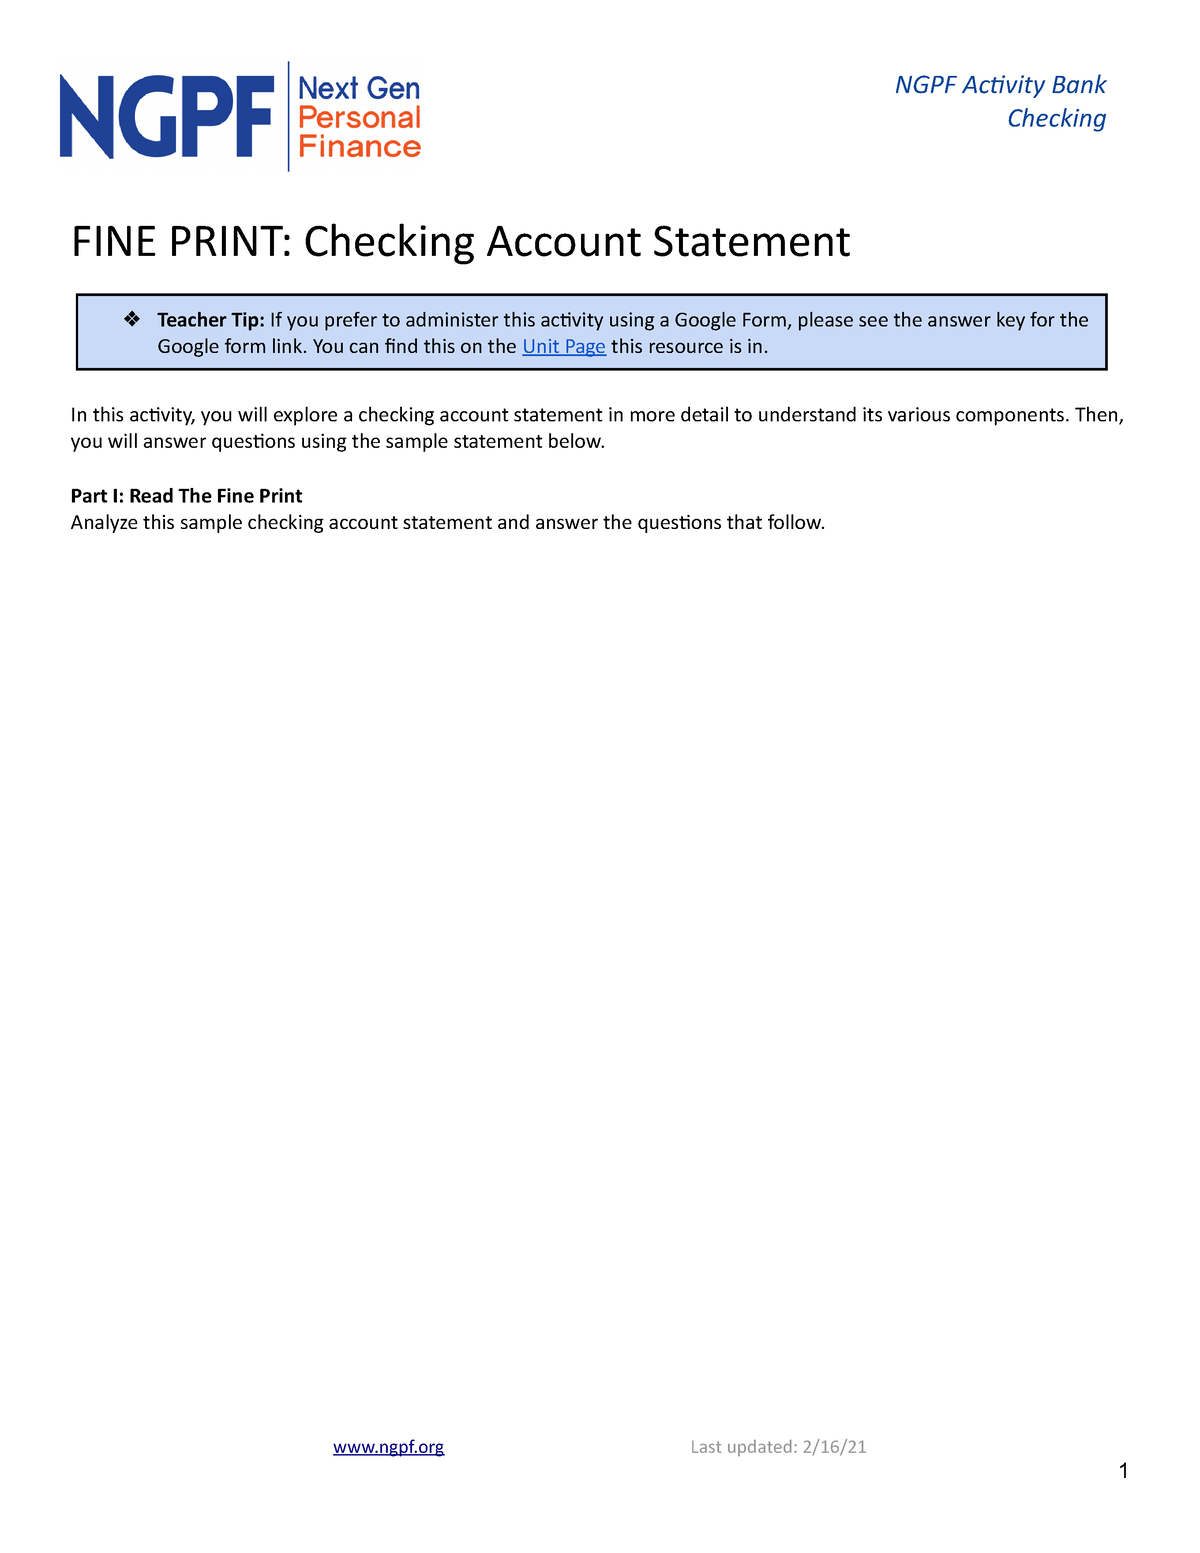 sample checking account statement